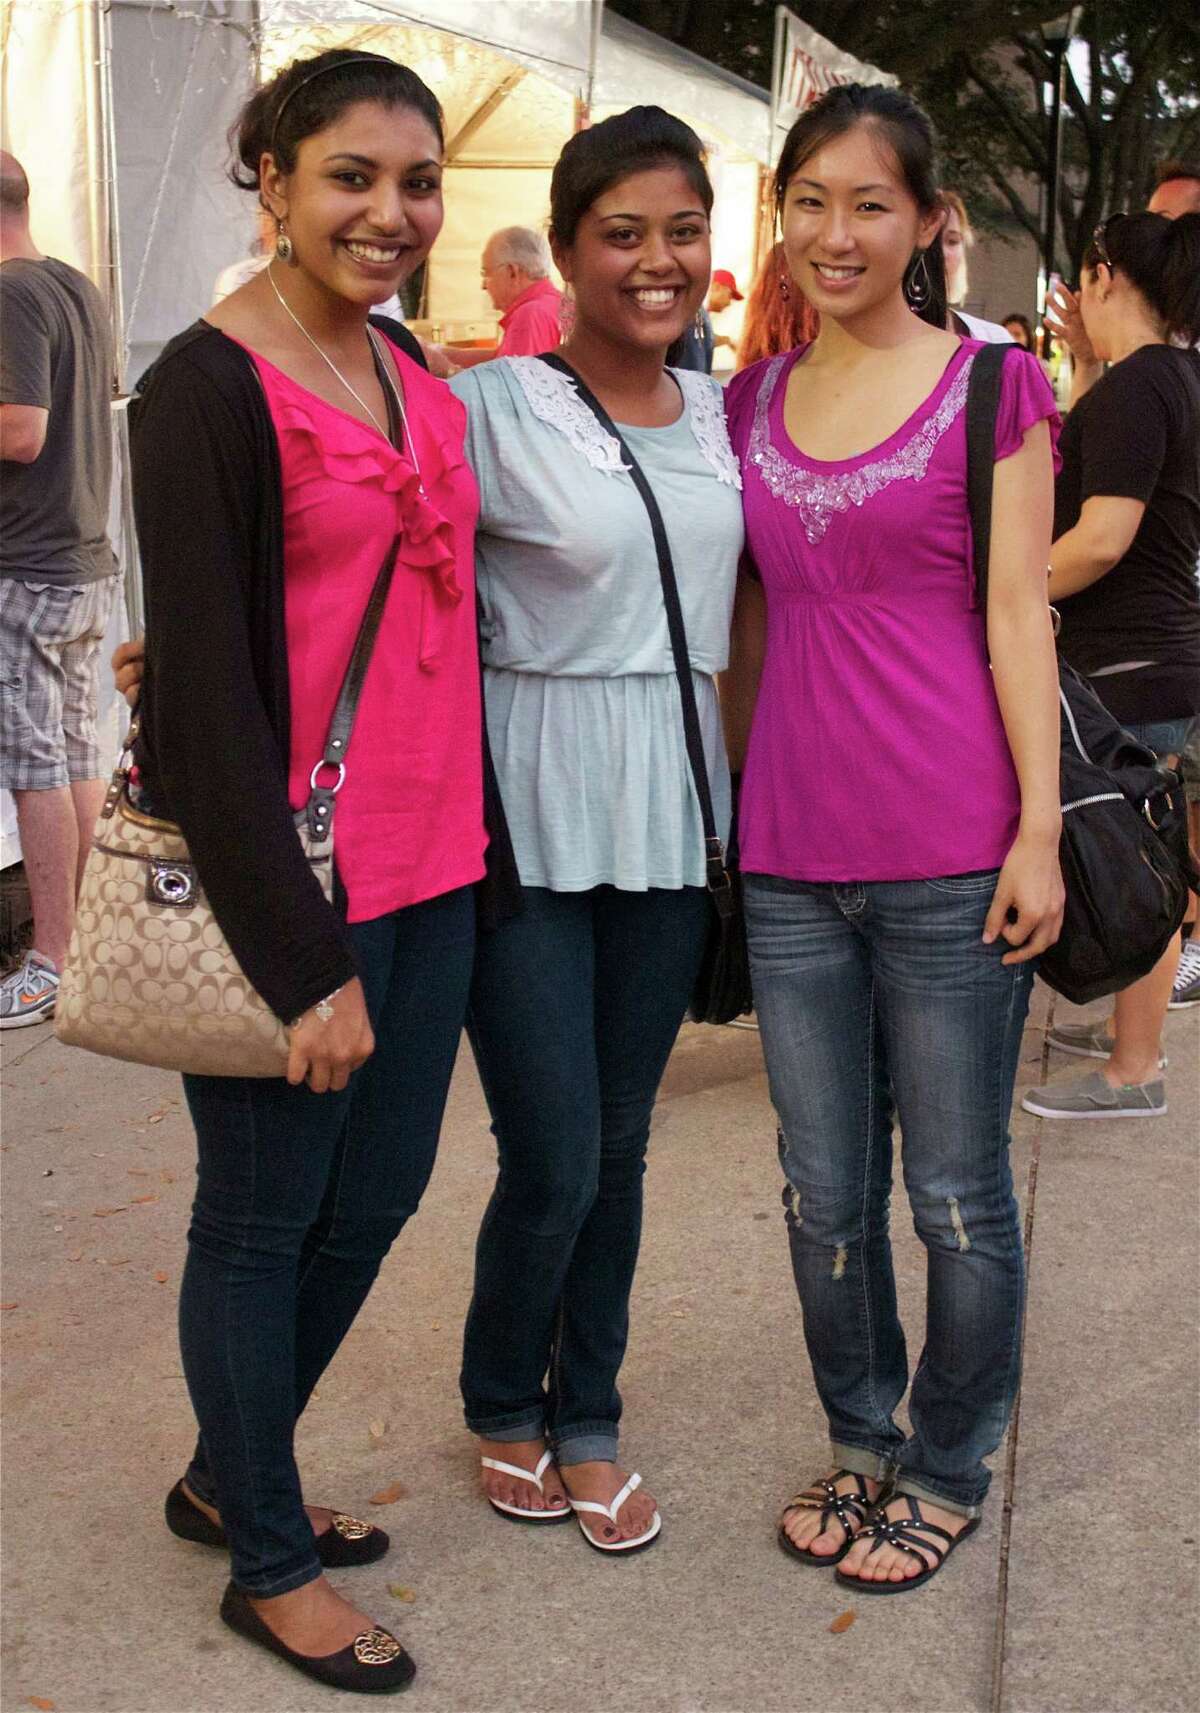 Joyce Chuen, from left, Tisha Jose and Deui Hari